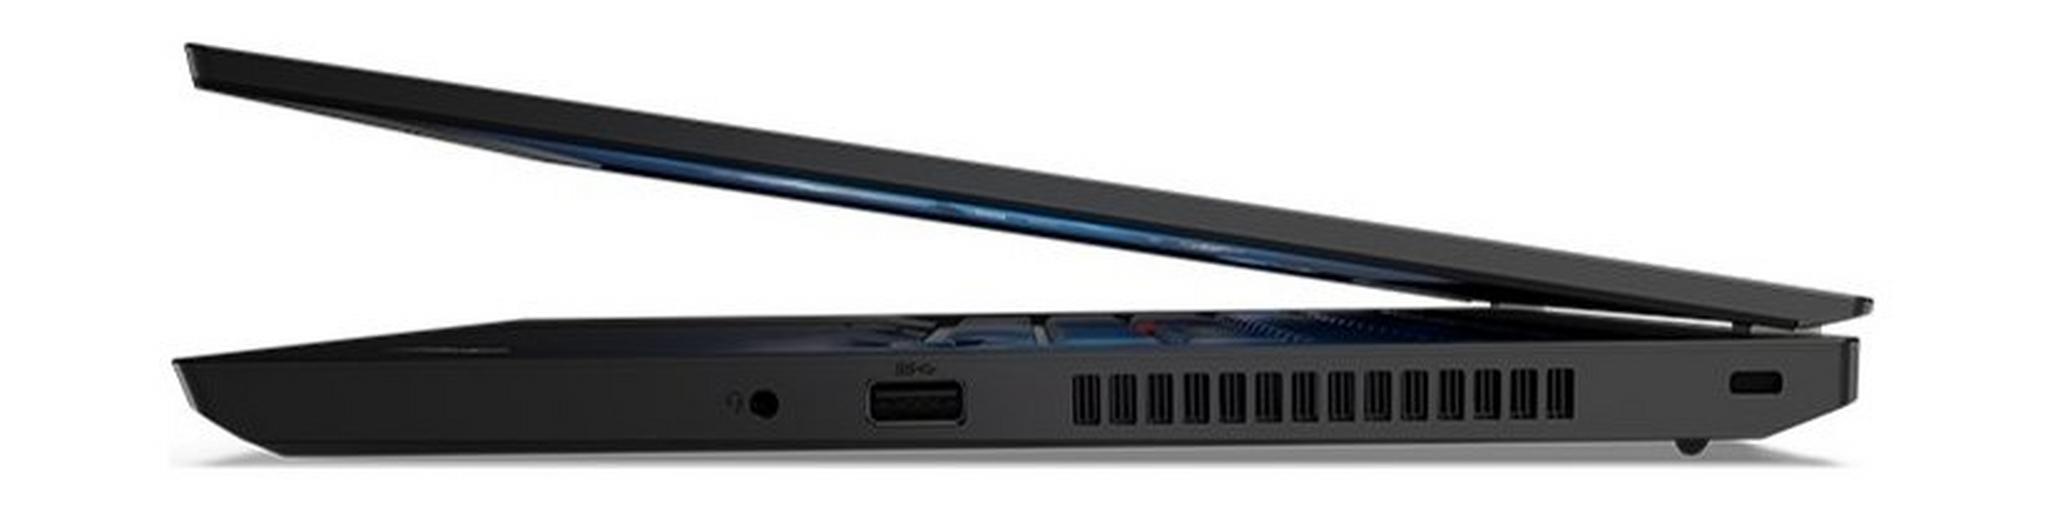 Lenovo ThinkPad L14 Intel Core I7 8GB RAM 512GB SSD 14" Laptop - Black